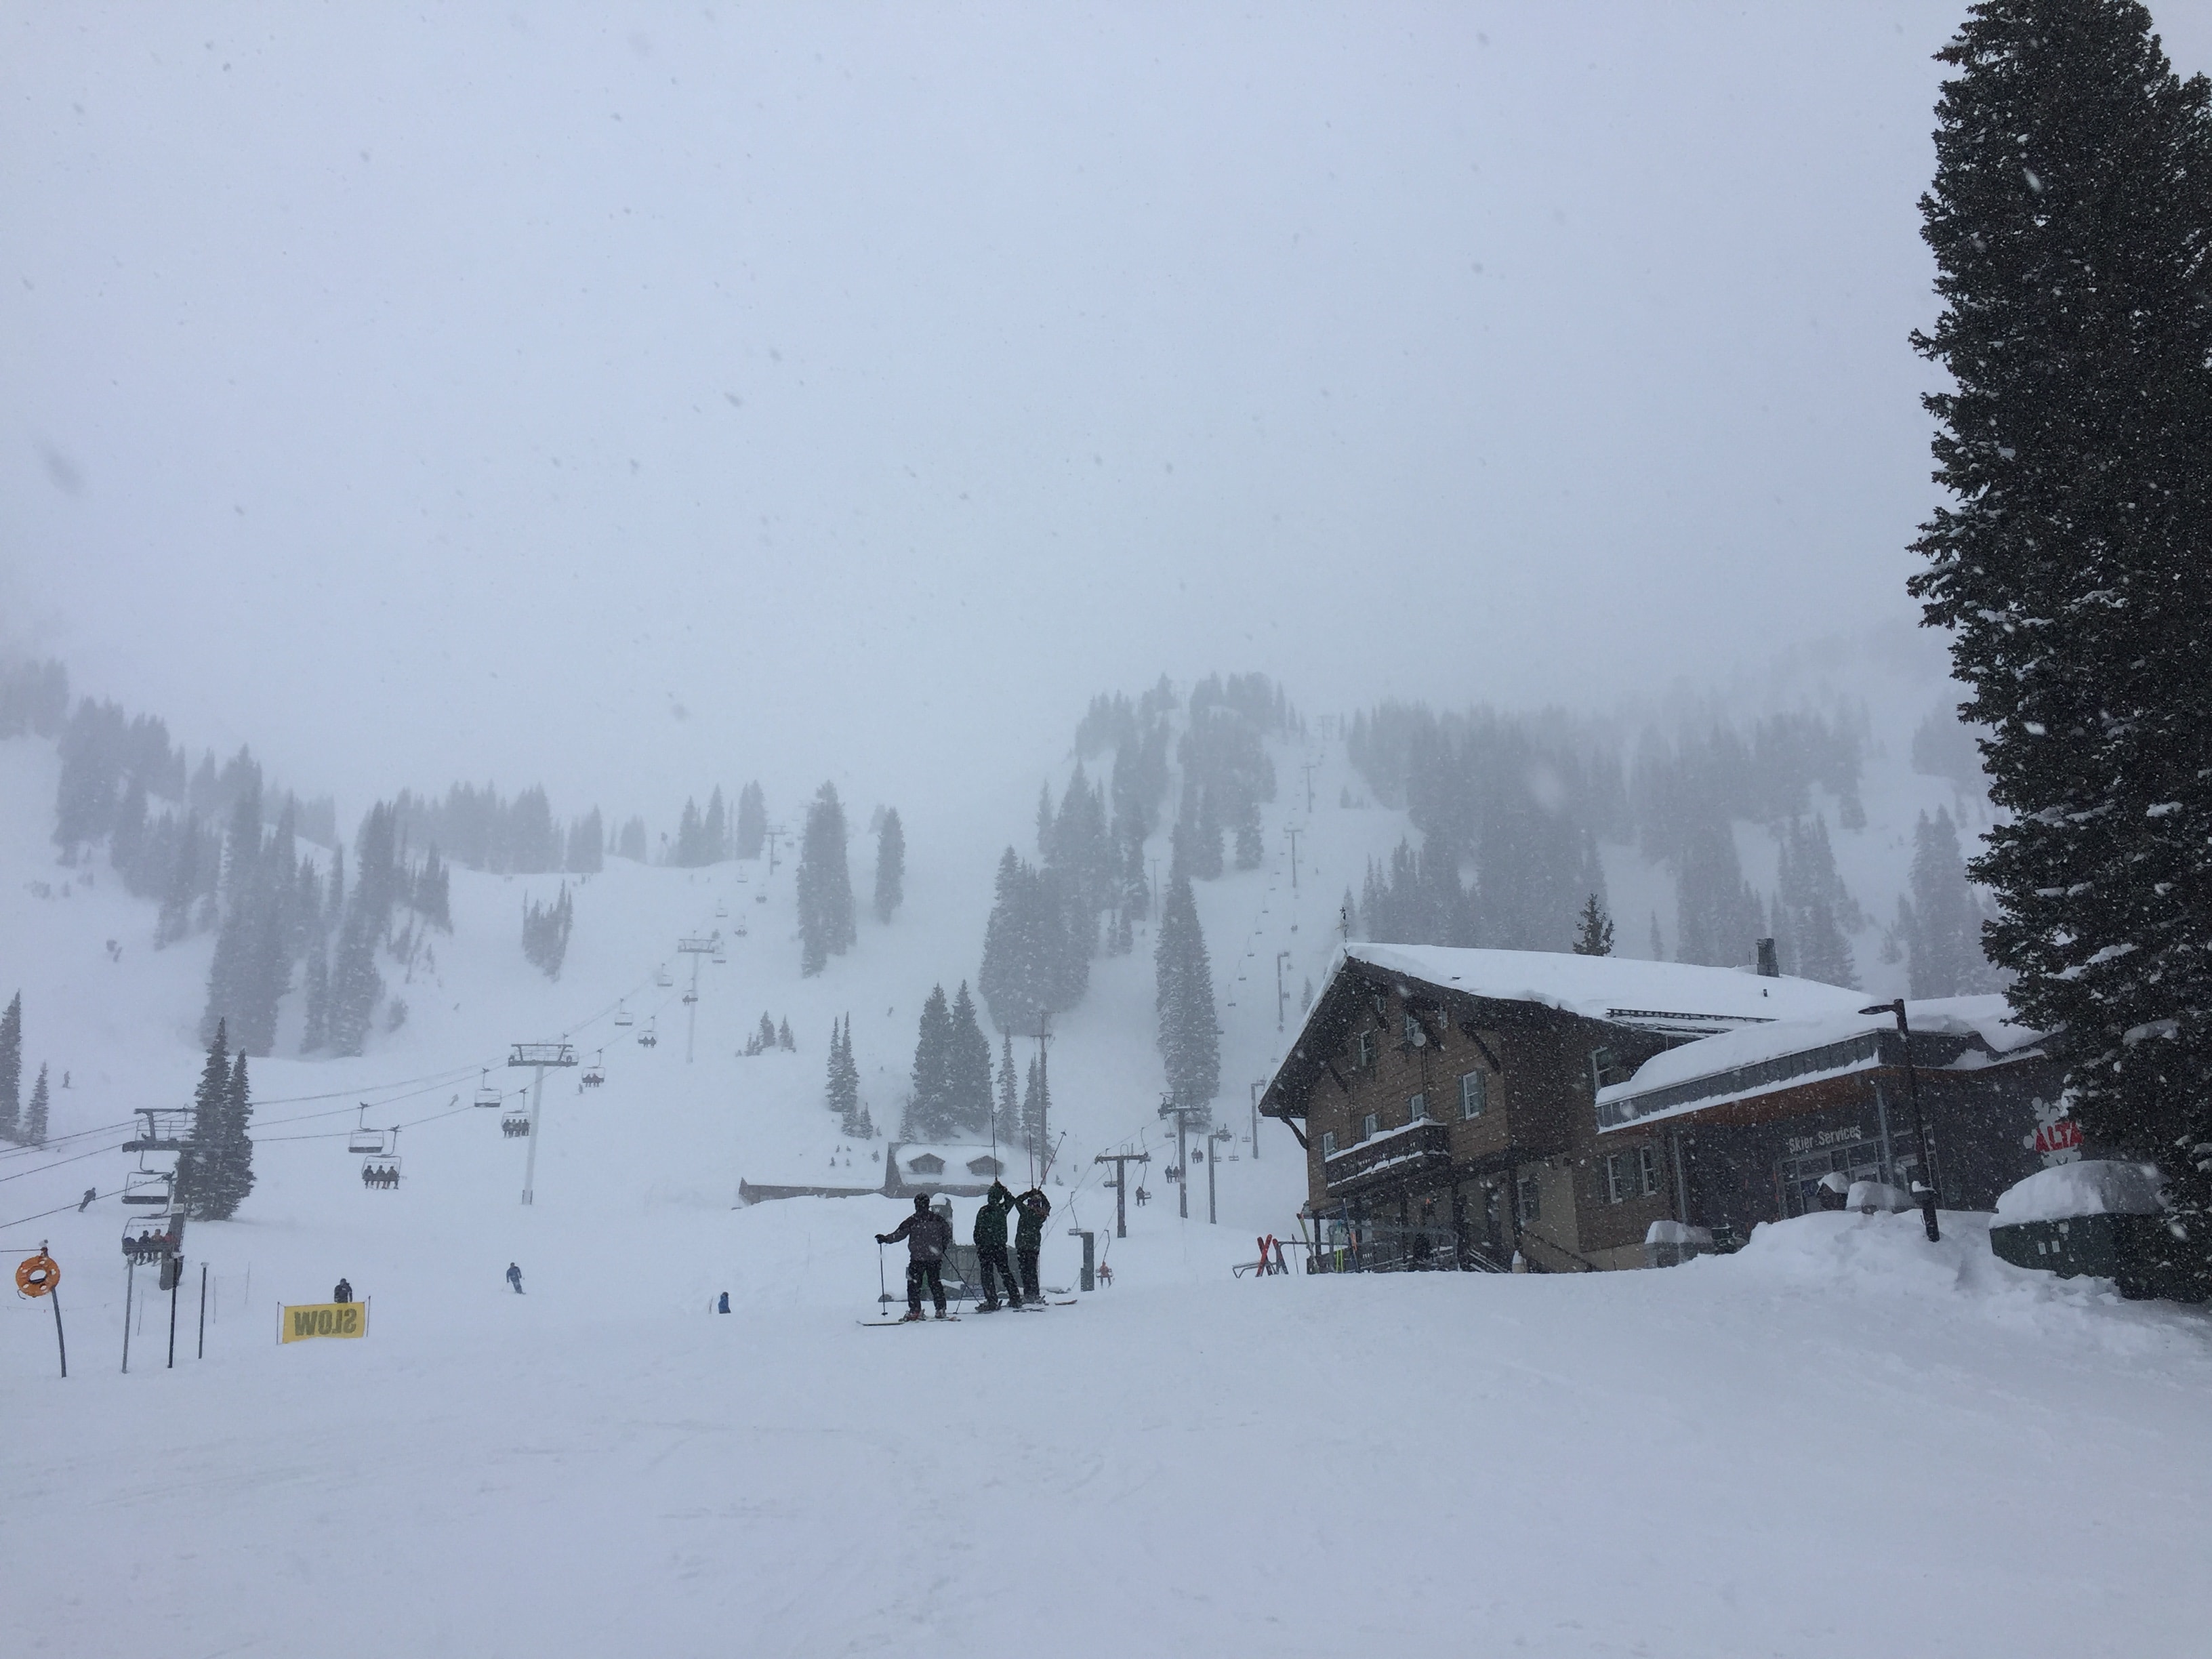 Wildcat Base at Alta Ski Area, today. // photo: Matias Ricci